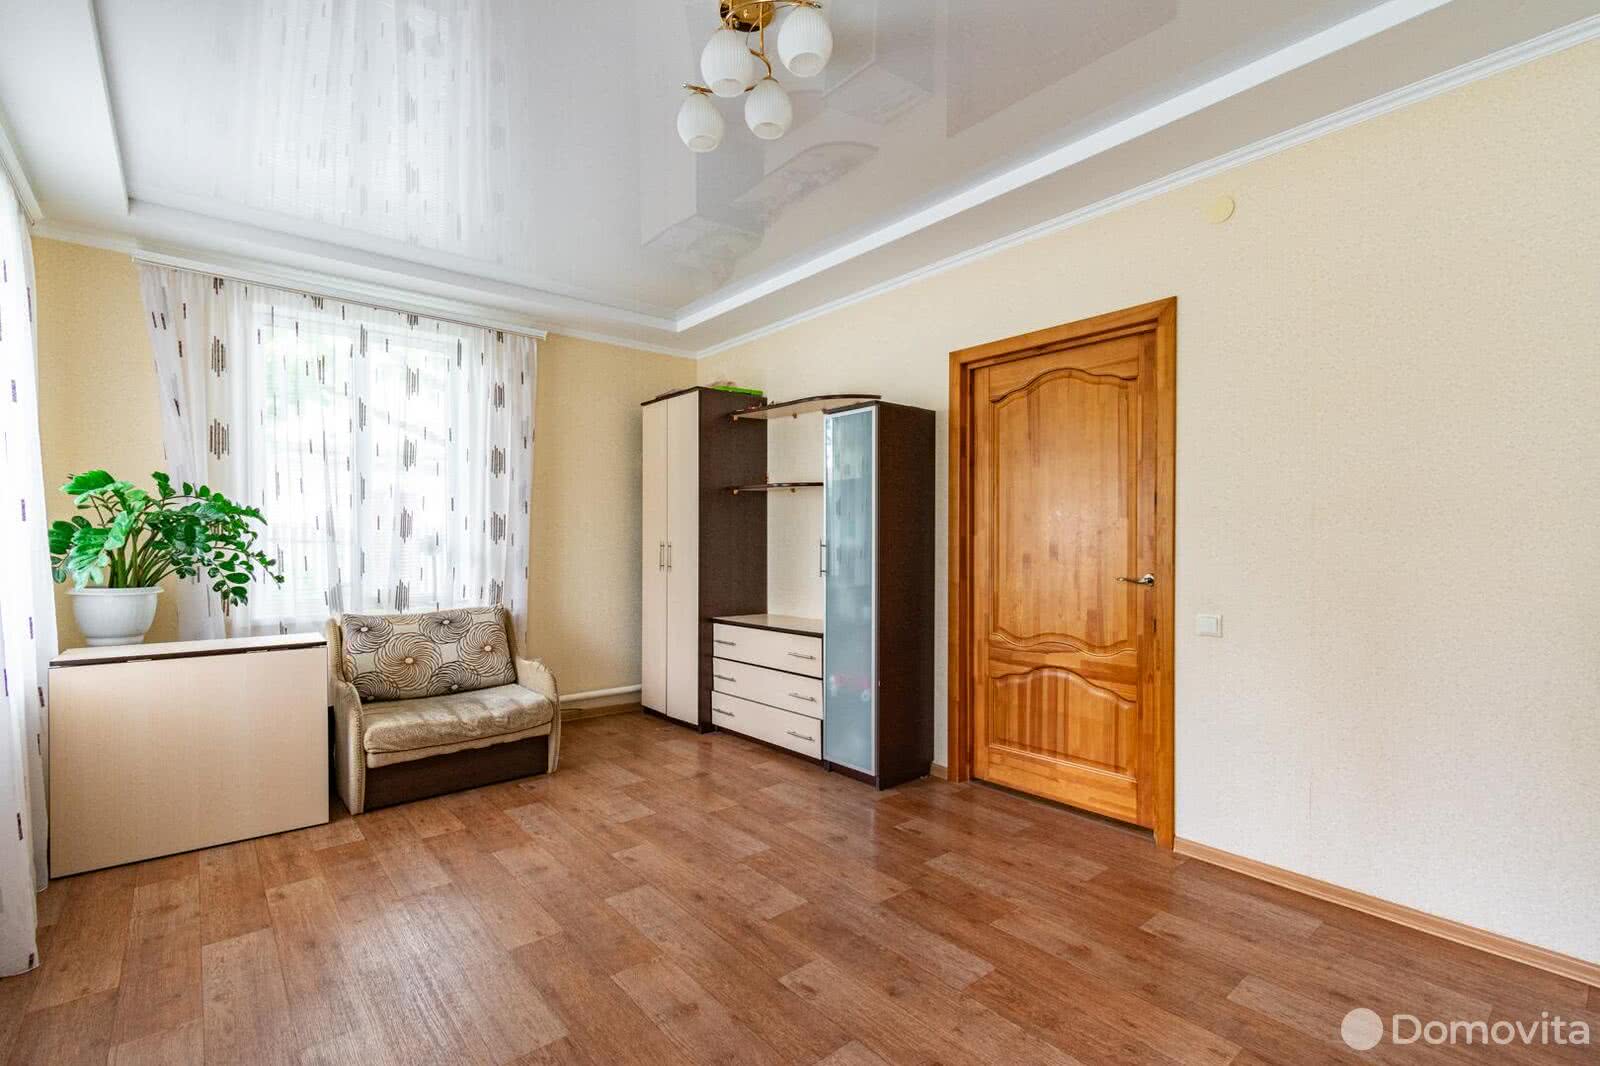 дом, Радошковичи, ул. 3 Липеня, д. 24, стоимость продажи 91 503 р.